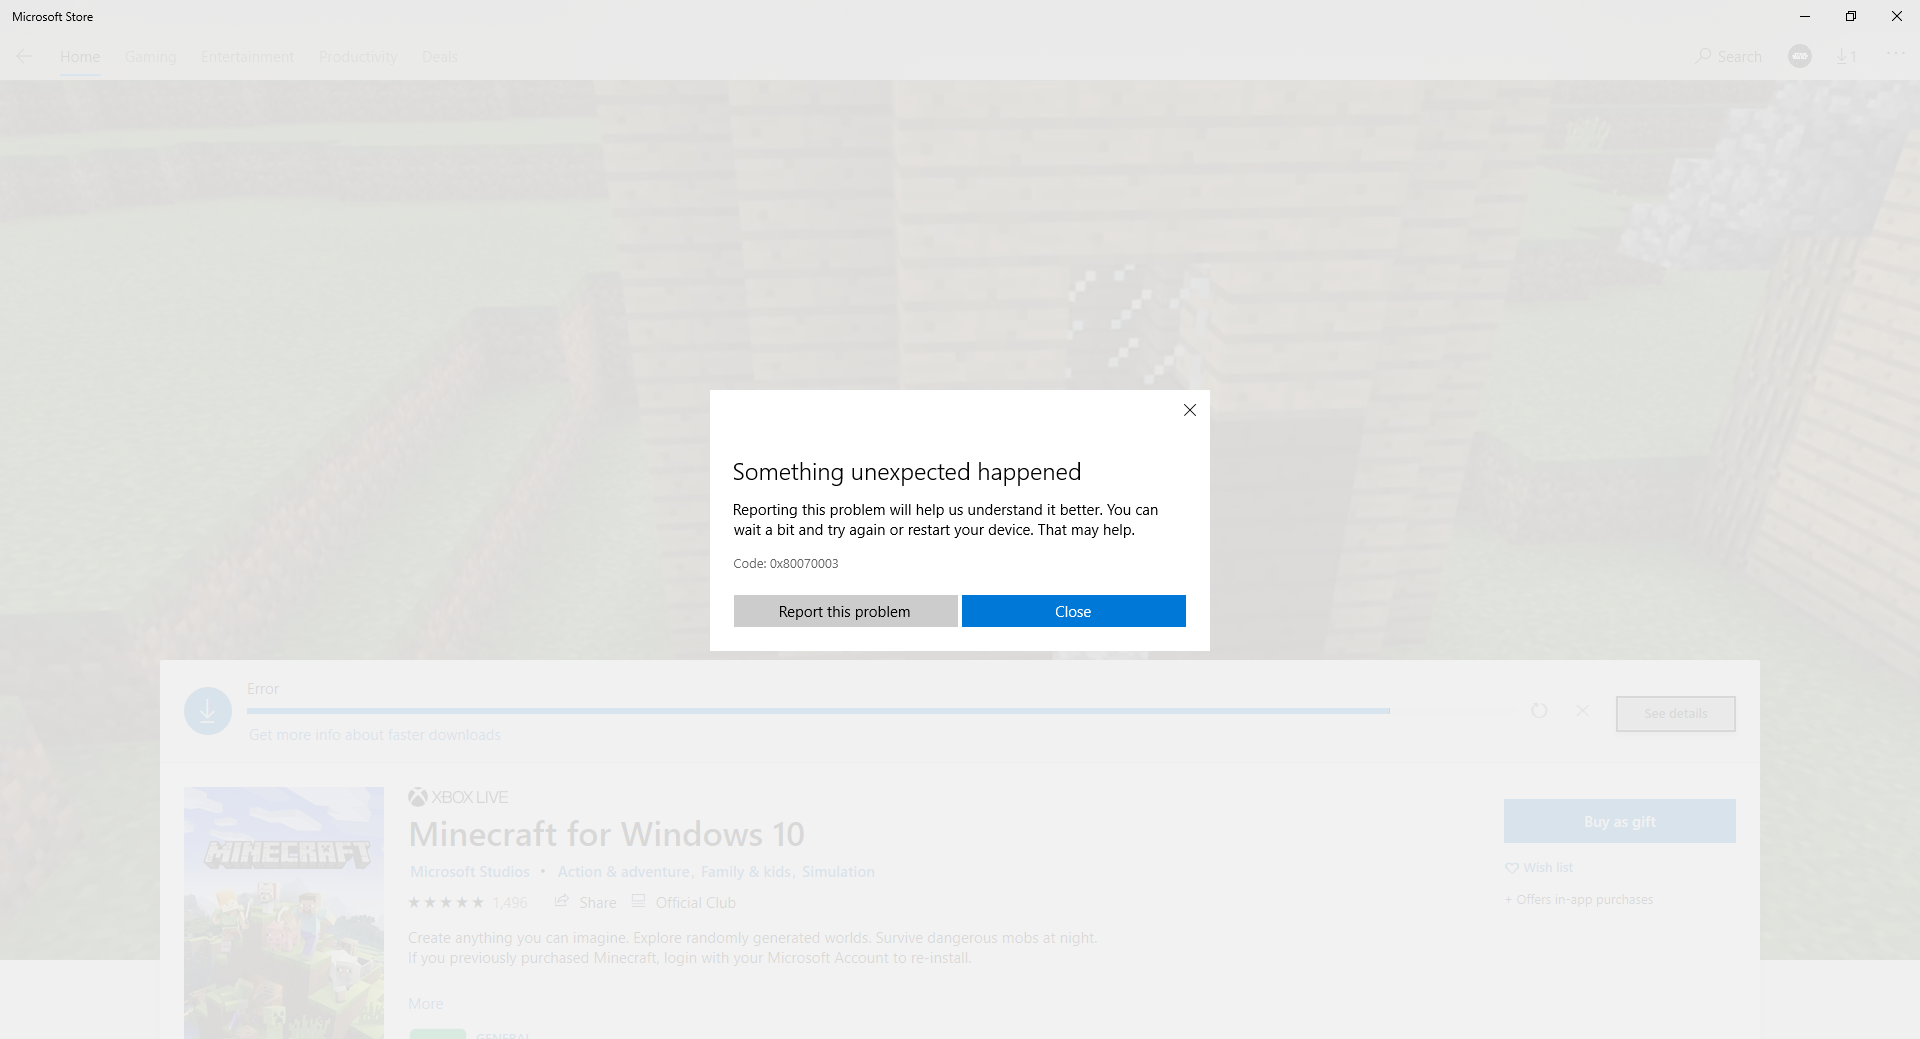 I cant install minecraft for Windows - Microsoft Community